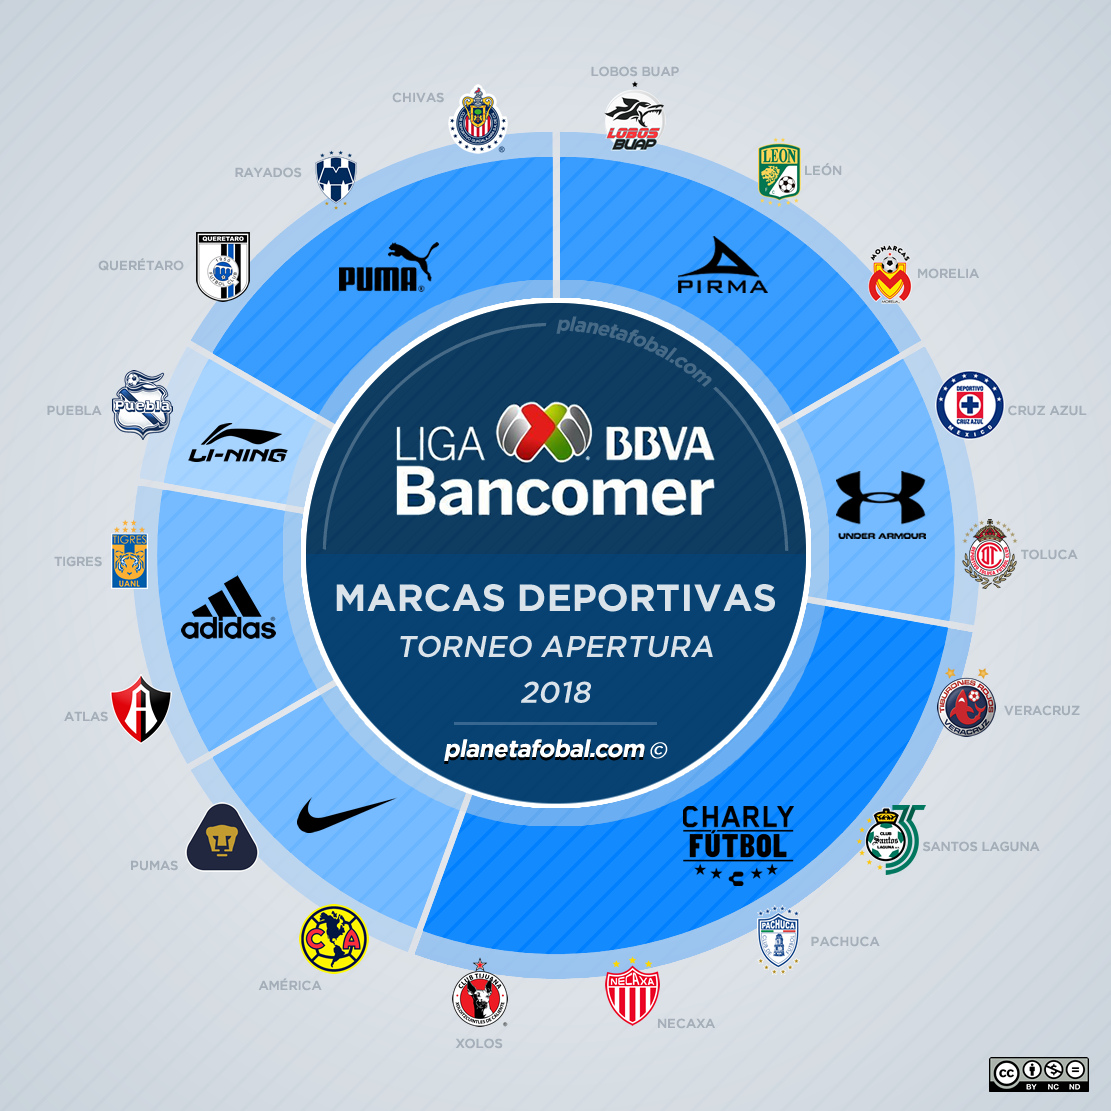 As fabricantes esportivas no Campeonato Mexicano 2021 - Show de